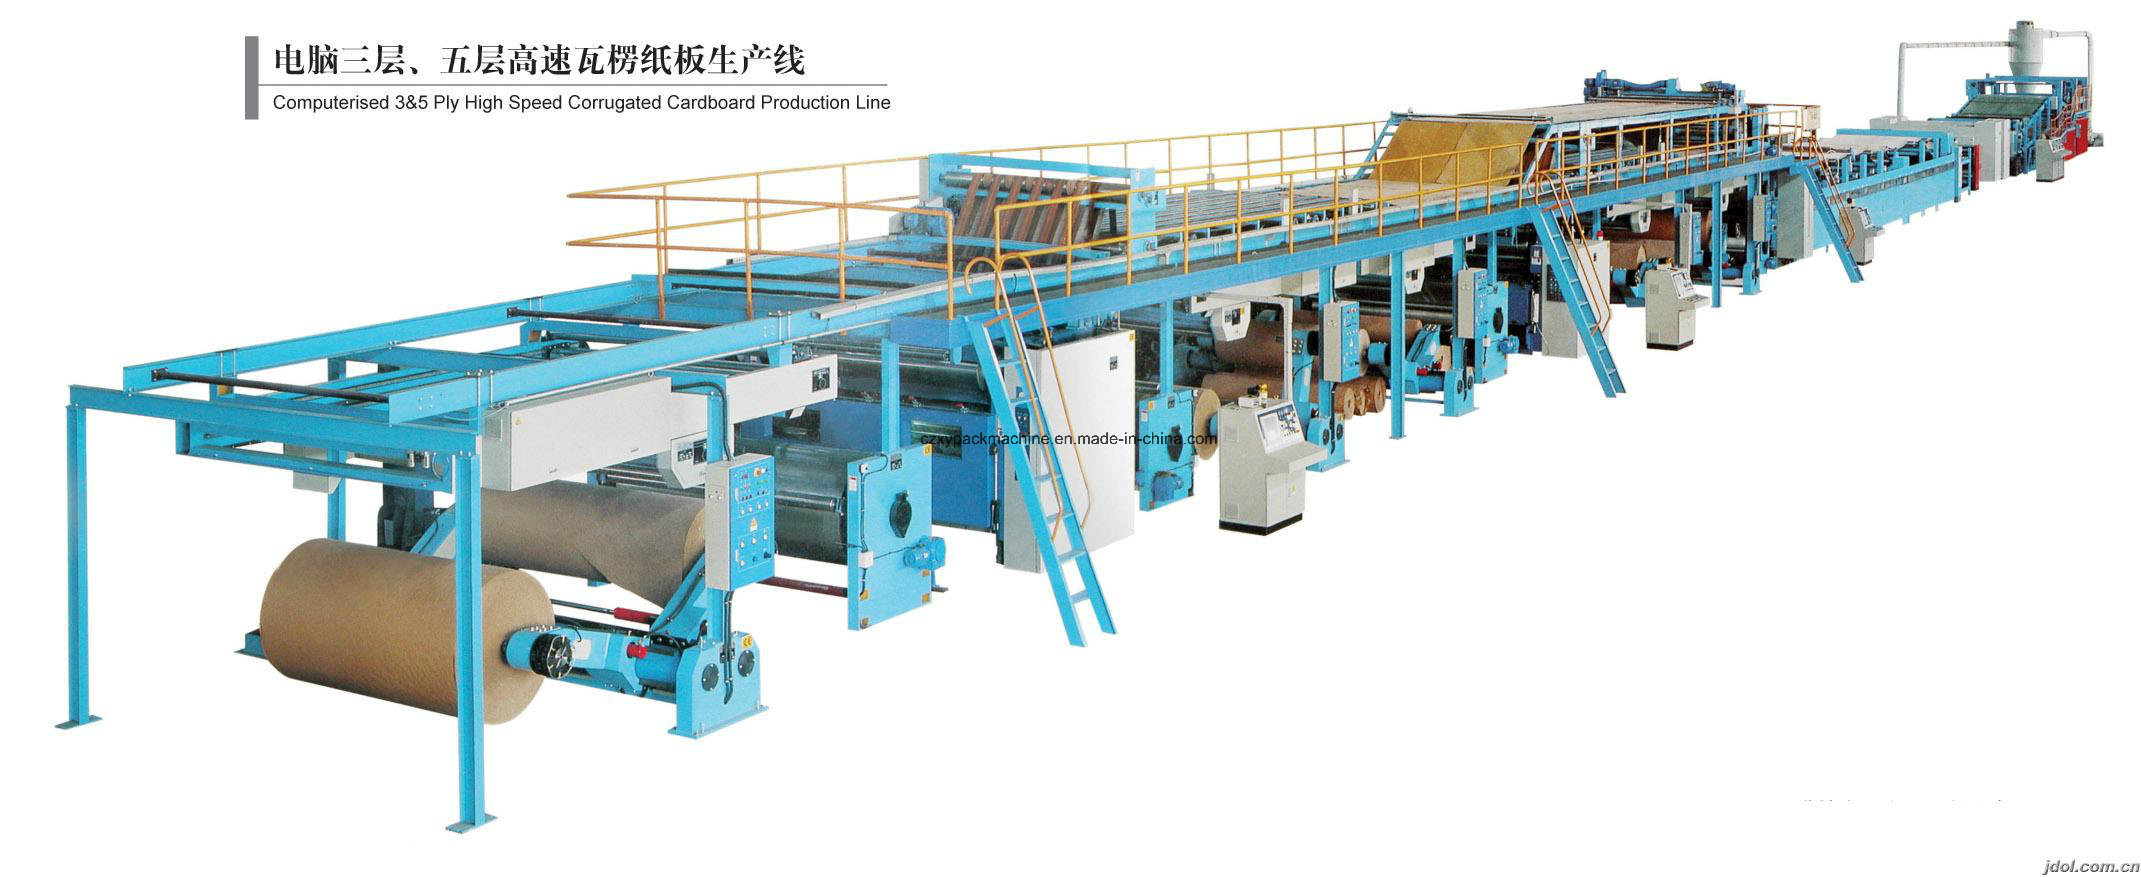 Double Corrugated Roller Corrugate Cardboard Production Line Machine